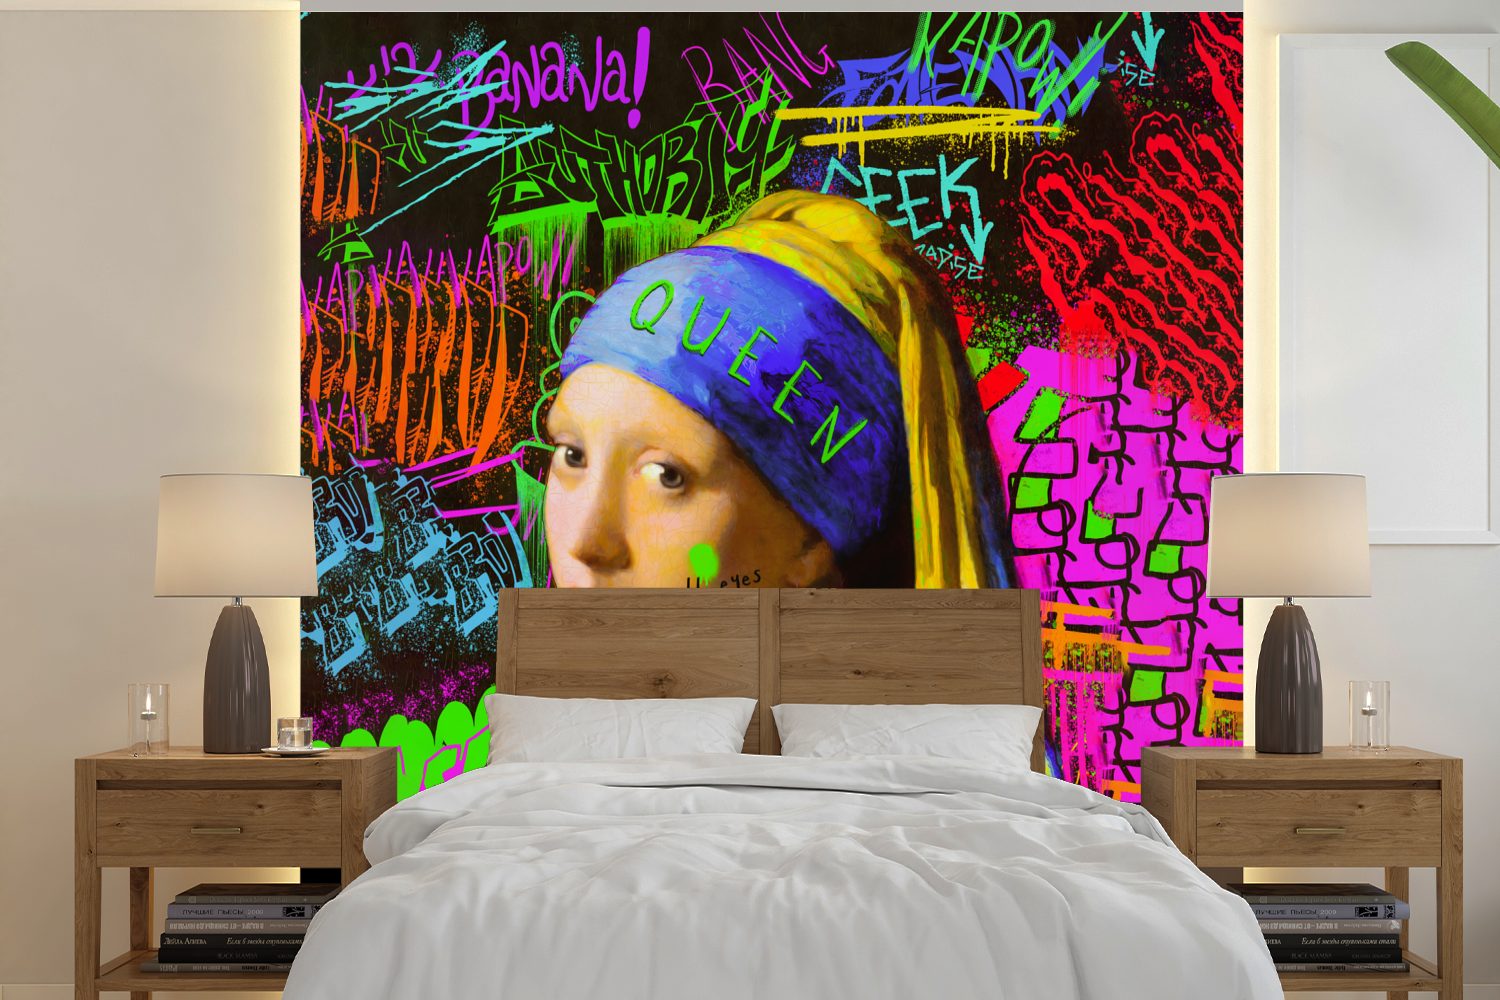 MuchoWow Fototapete Girl with a Pearl Earring - Neon - Graffiti, Matt, bedruckt, (5 St), Vinyl Tapete für Wohnzimmer oder Schlafzimmer, Wandtapete | Fototapeten